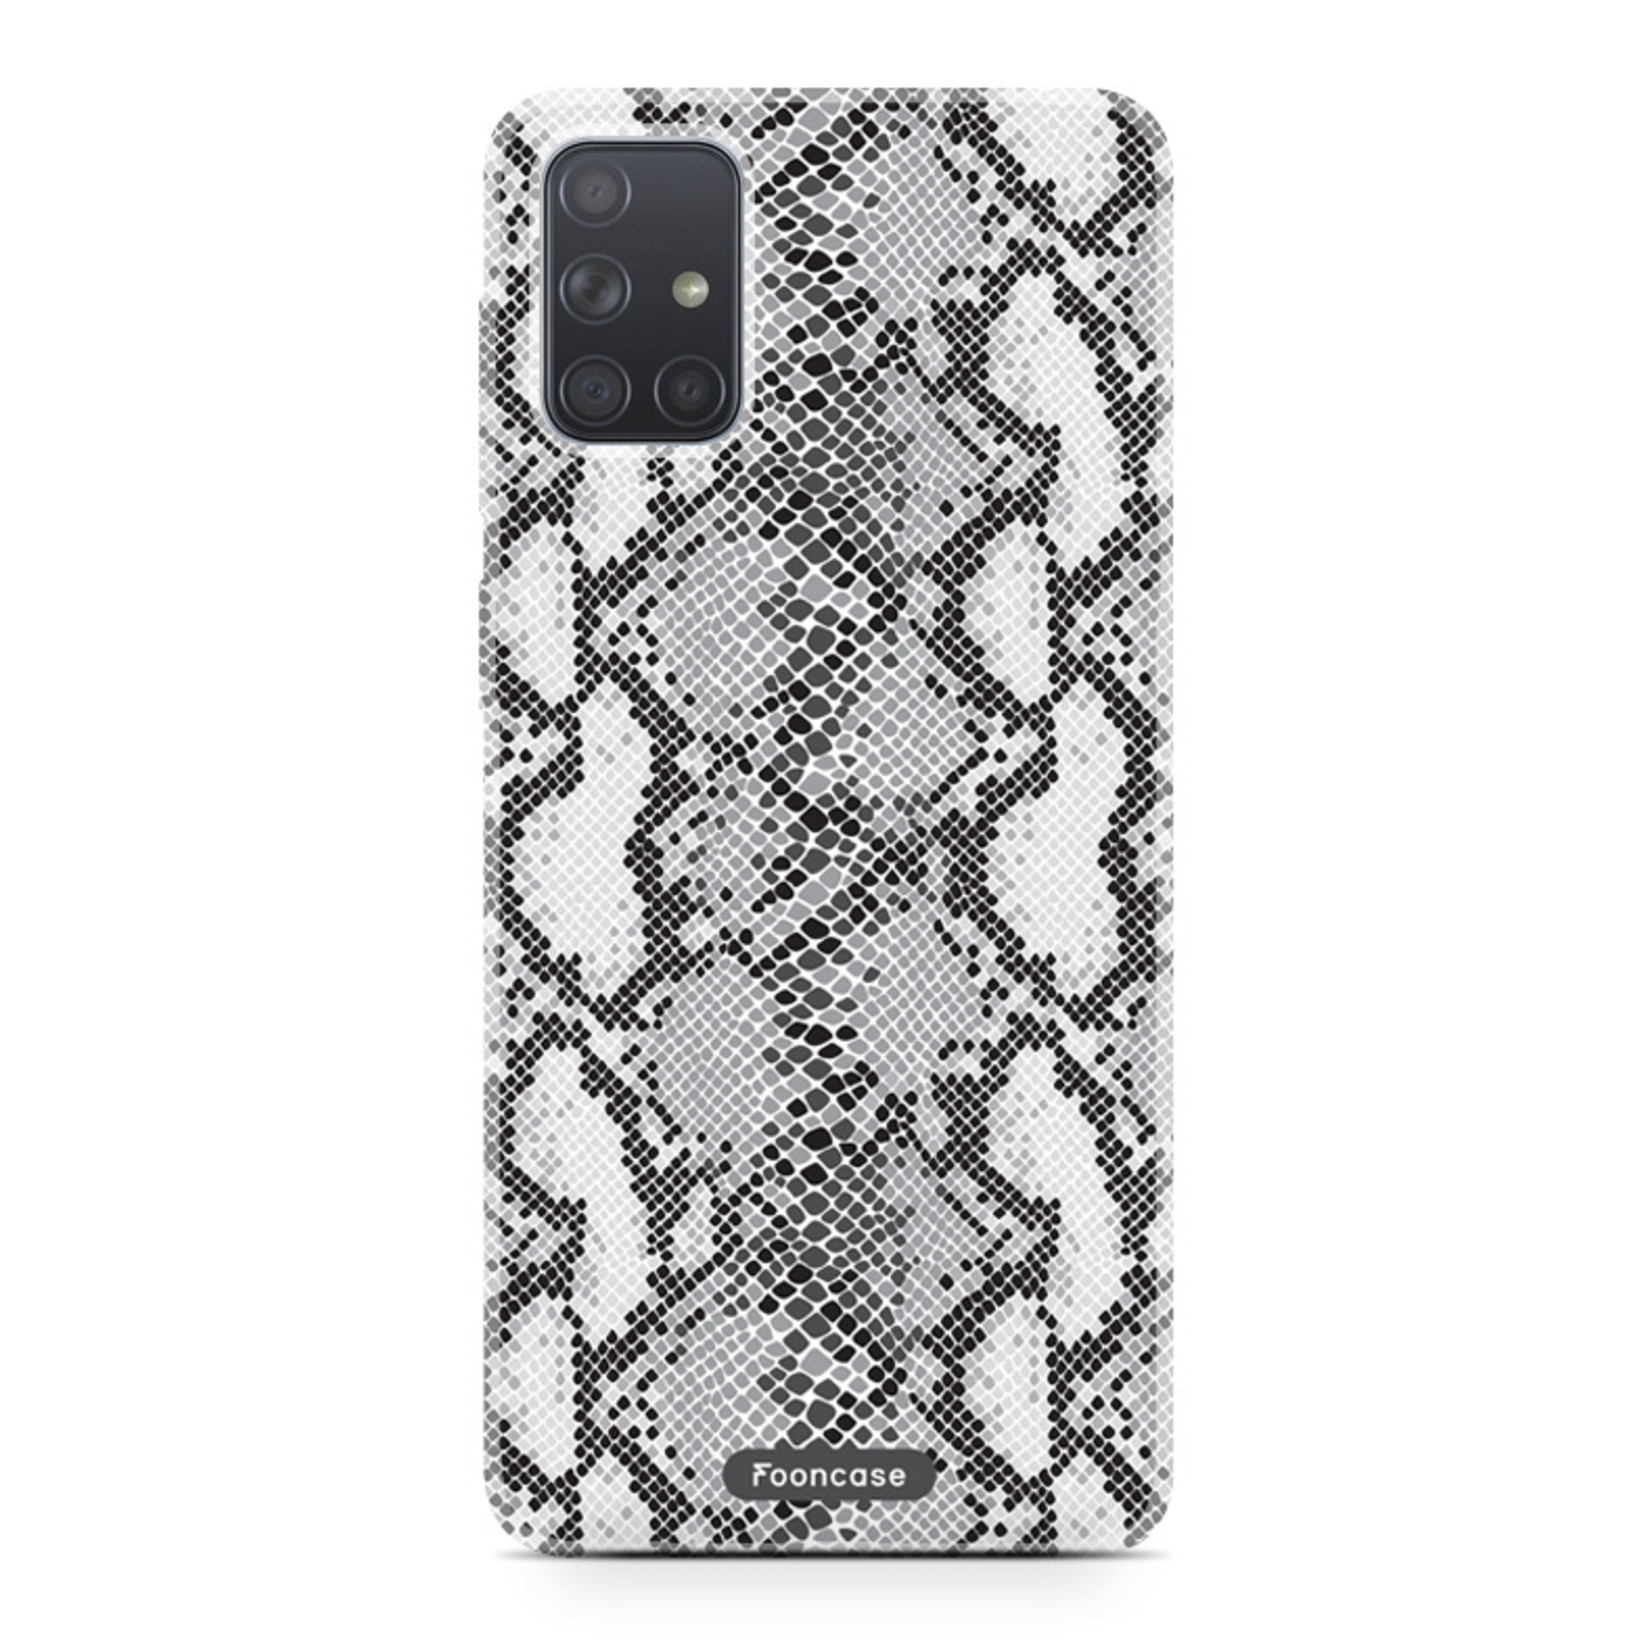 Samsung Galaxy A51 hoesje TPU Soft Case - Back Cover - Snake it / Slangen print